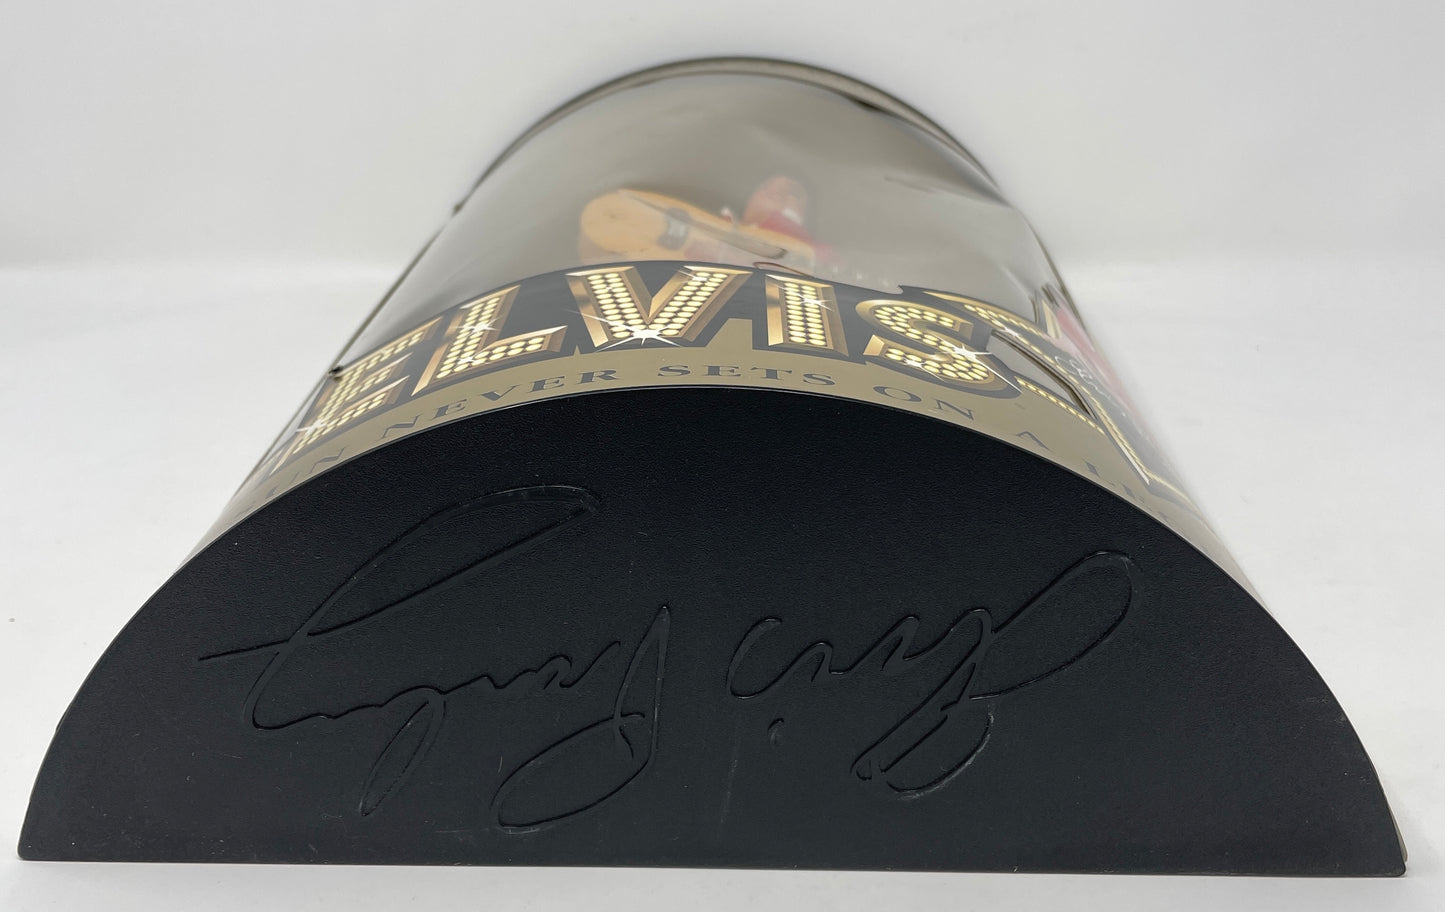 ELVIS - THE SUN NEVER SETS ON A LEGEND - JAILHOUSE ROCK 45 RPM - COMMEMORATIVE COLLECTION - HASBRO 1993